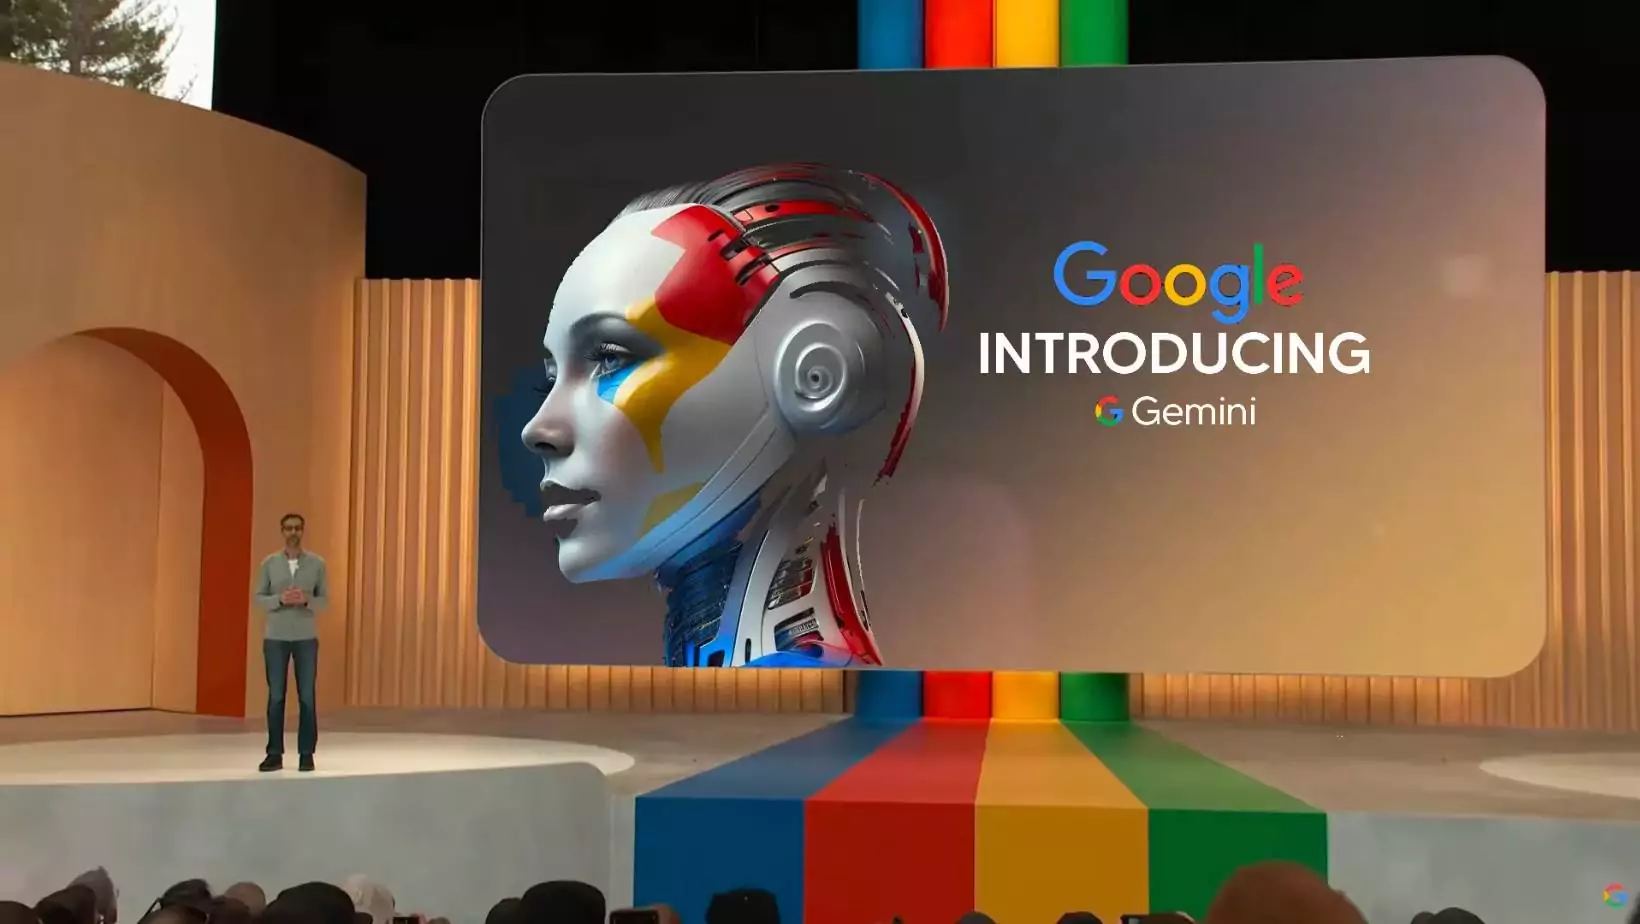 Google ने Gemini AI लॉन्च किया